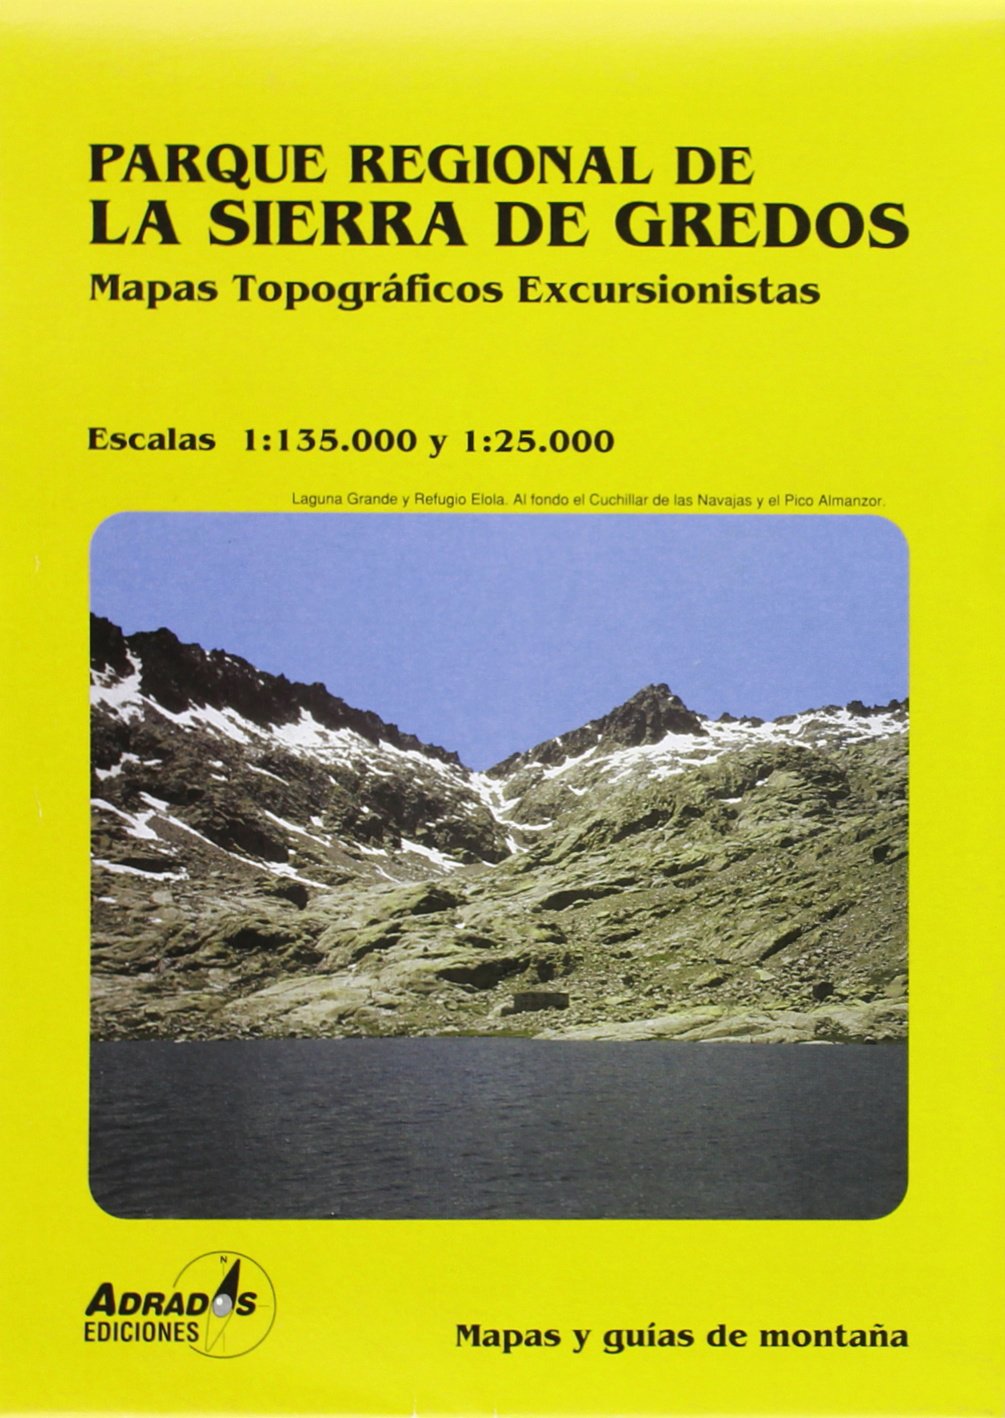 Online bestellen: Wandelkaart Sierra de Gredos | Adrados Ediciones